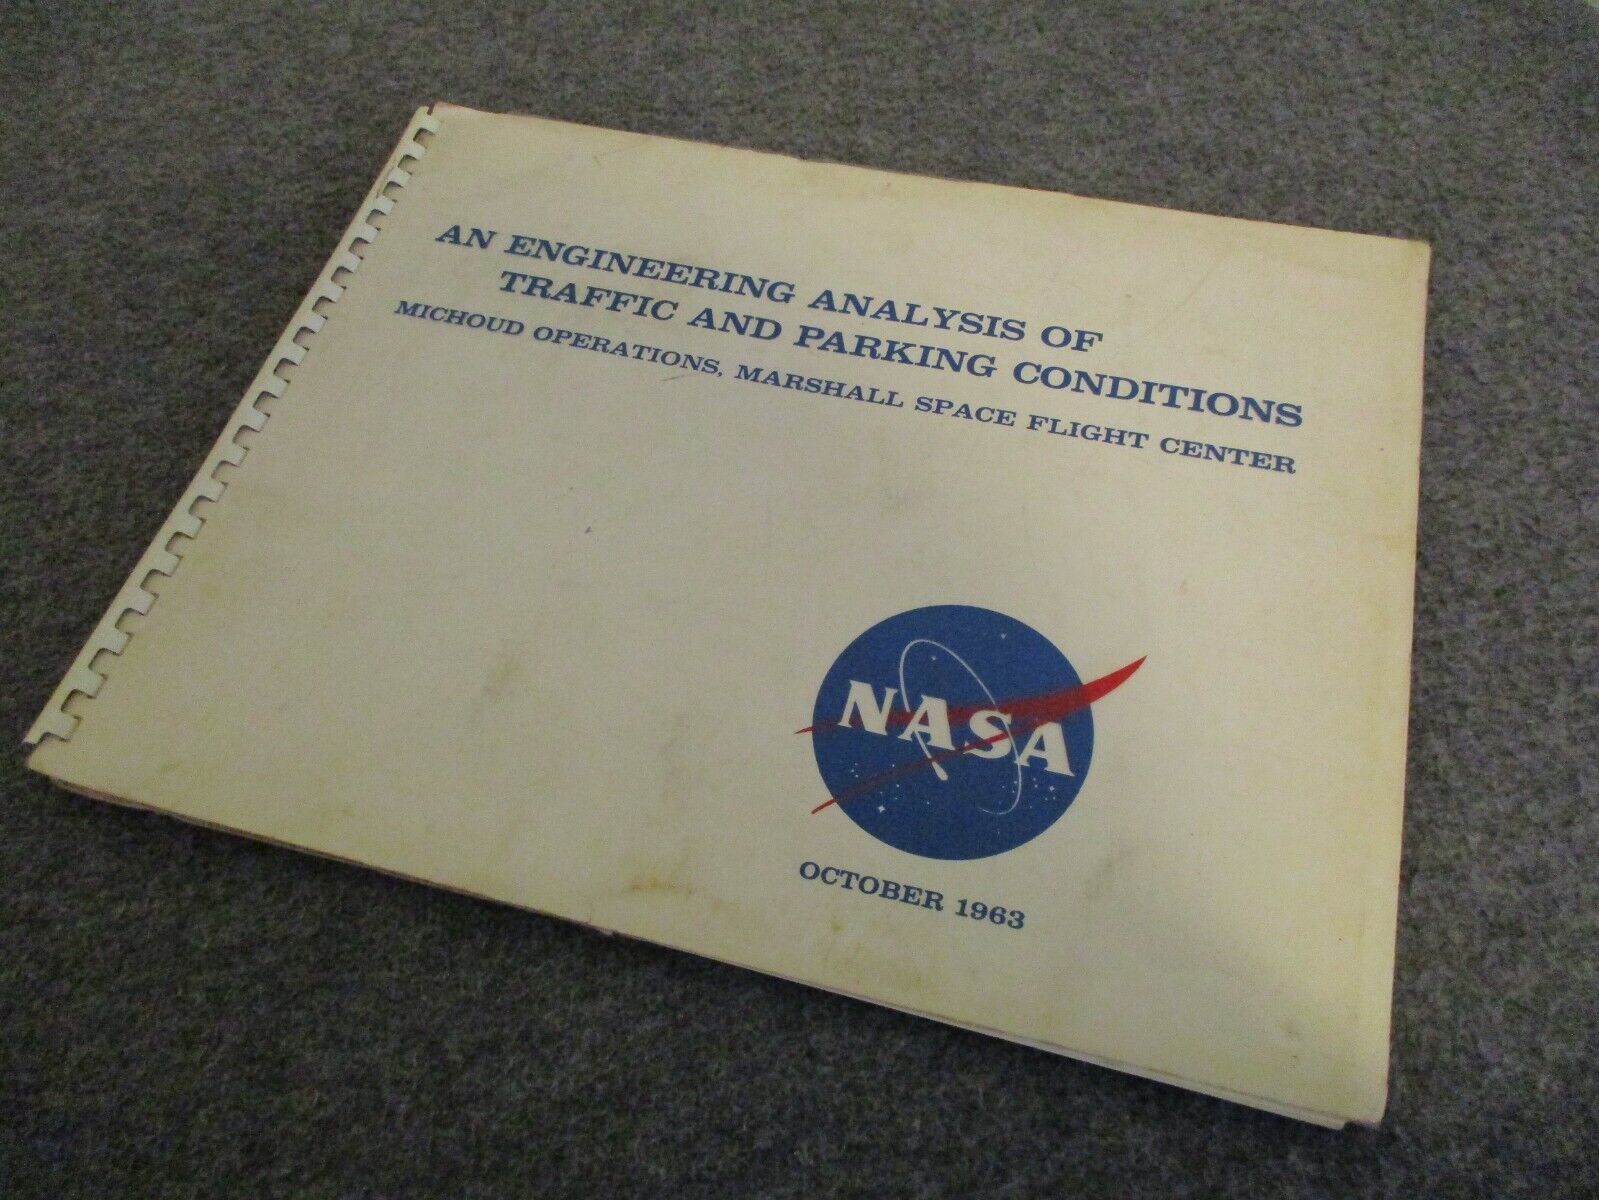 1963 NASA MSFC MICHOUD OPERATIONS ENGINEERING ANALYSIS & PLANS TRAFFIC & PARKING